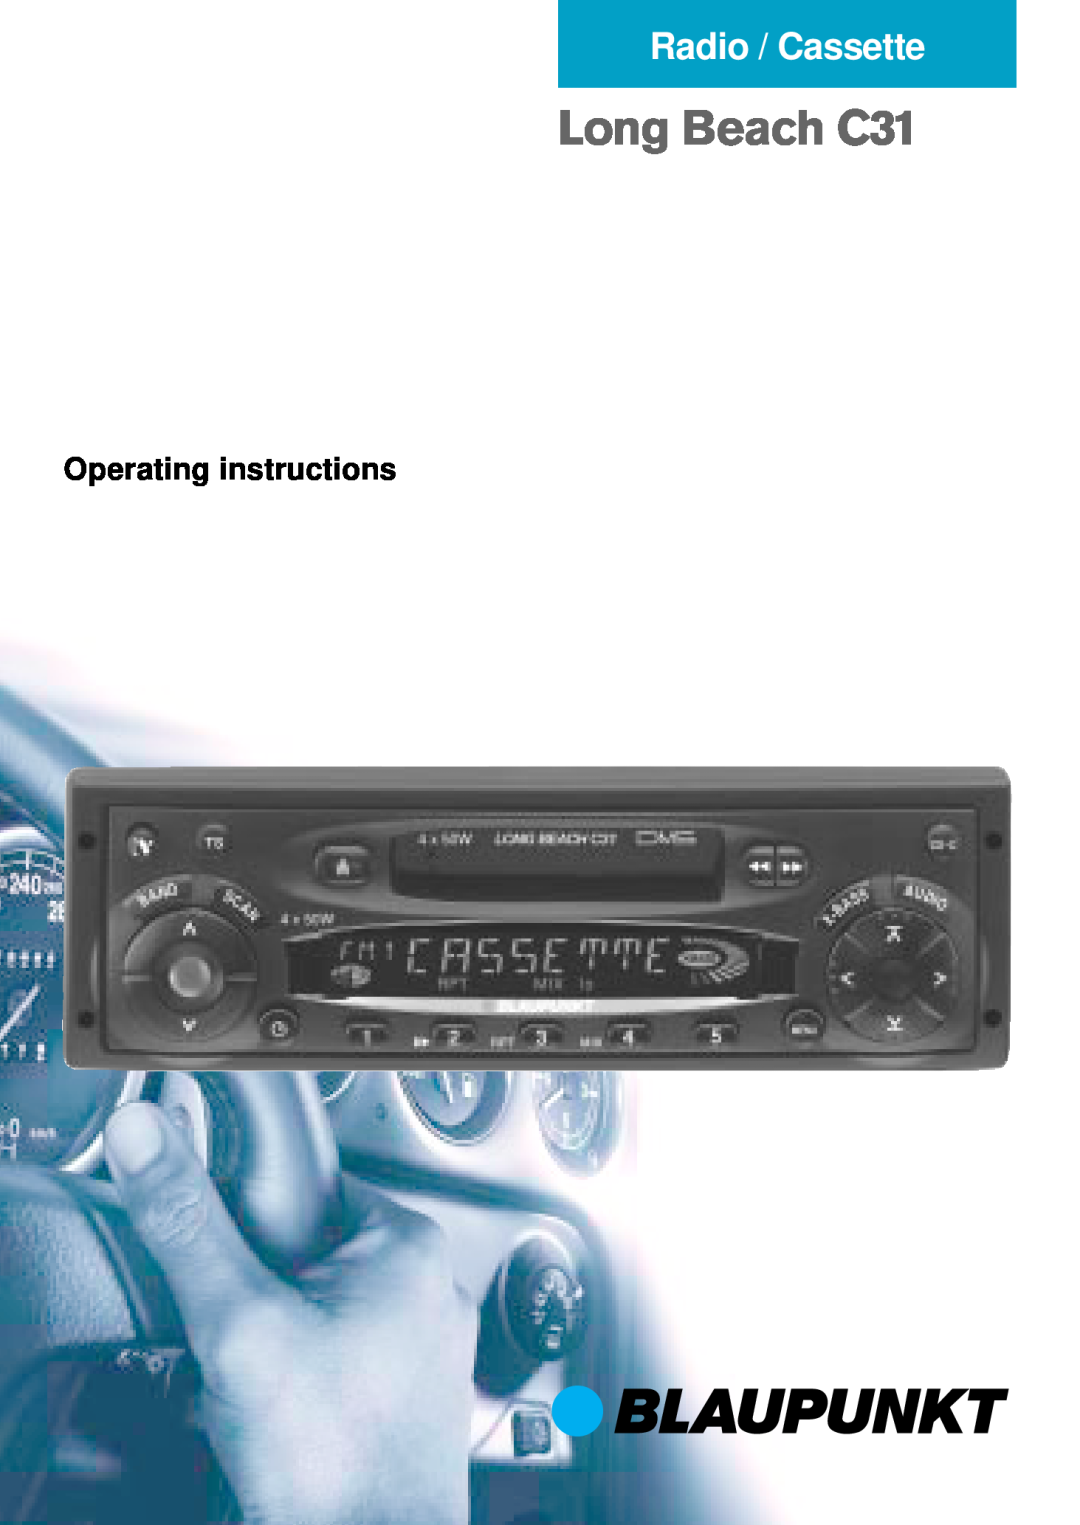 Blaupunkt manual Operating instructions, Long Beach C31, Radio / Cassette 